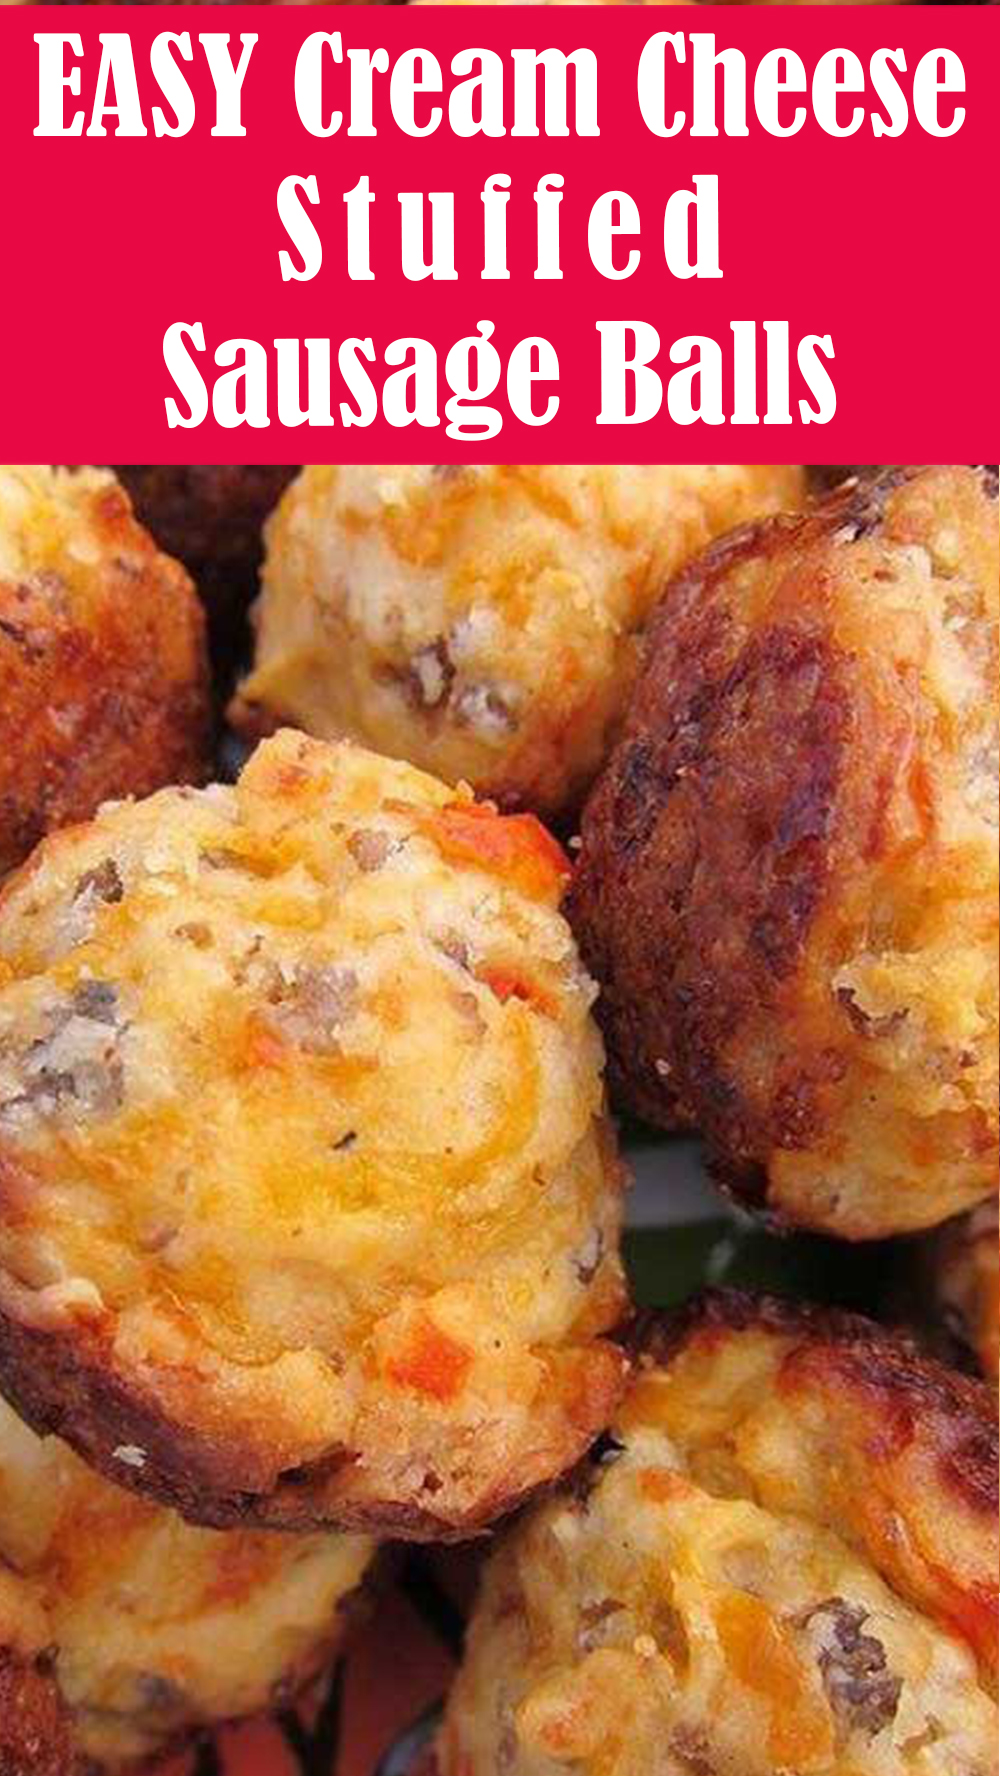 EASY Cream Cheese Stuffed Sausage Balls Recipe